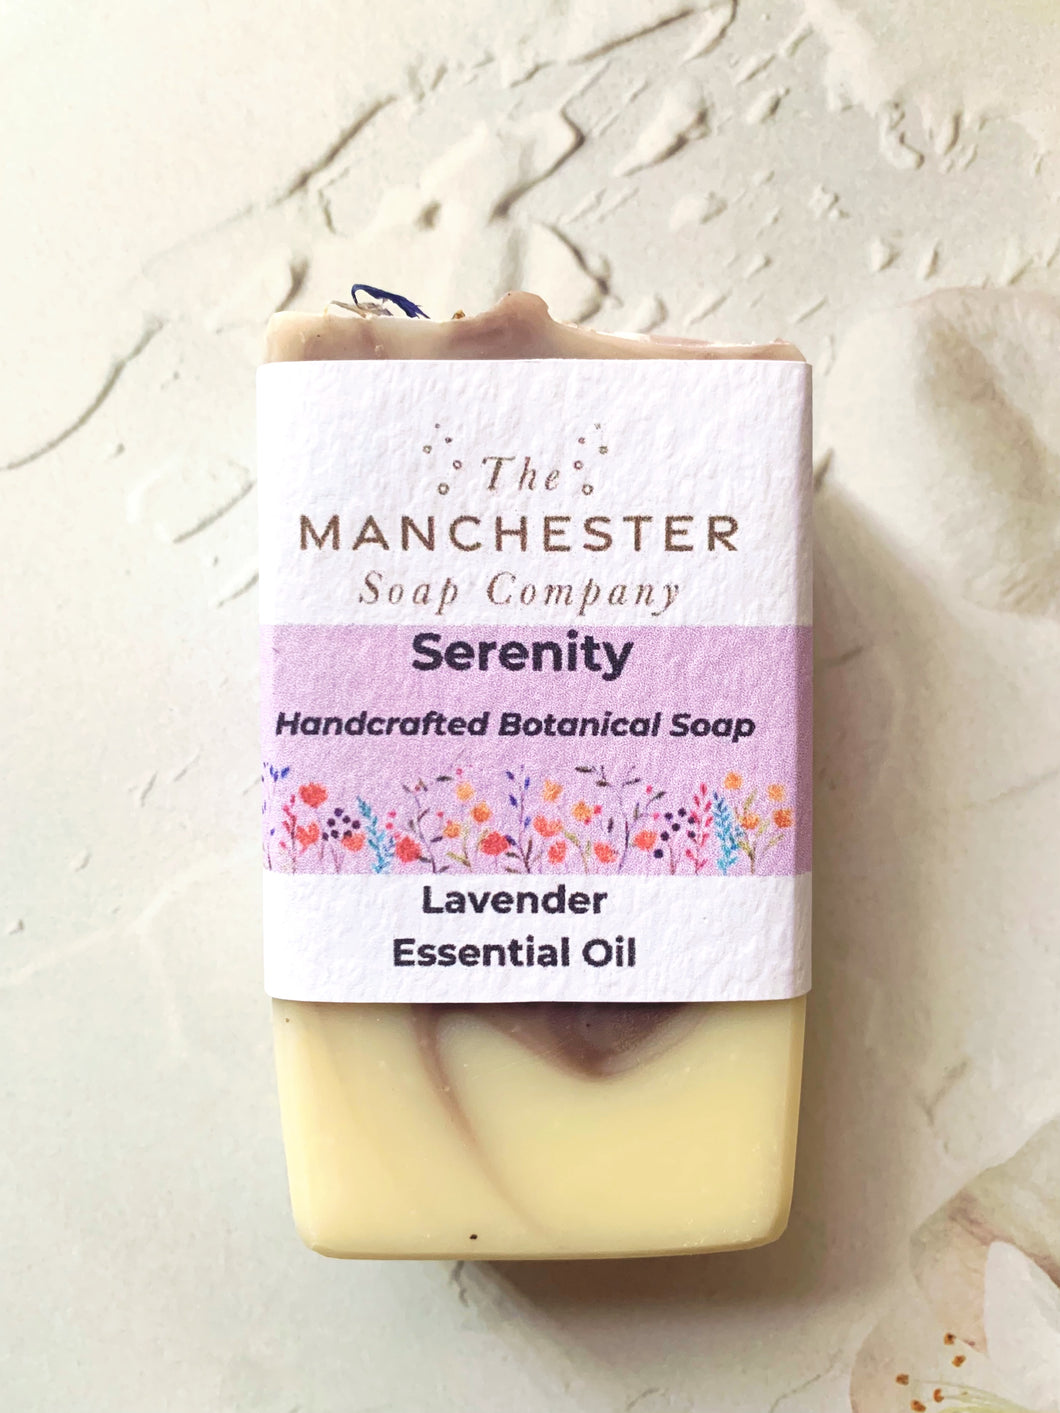 Serenity Soap